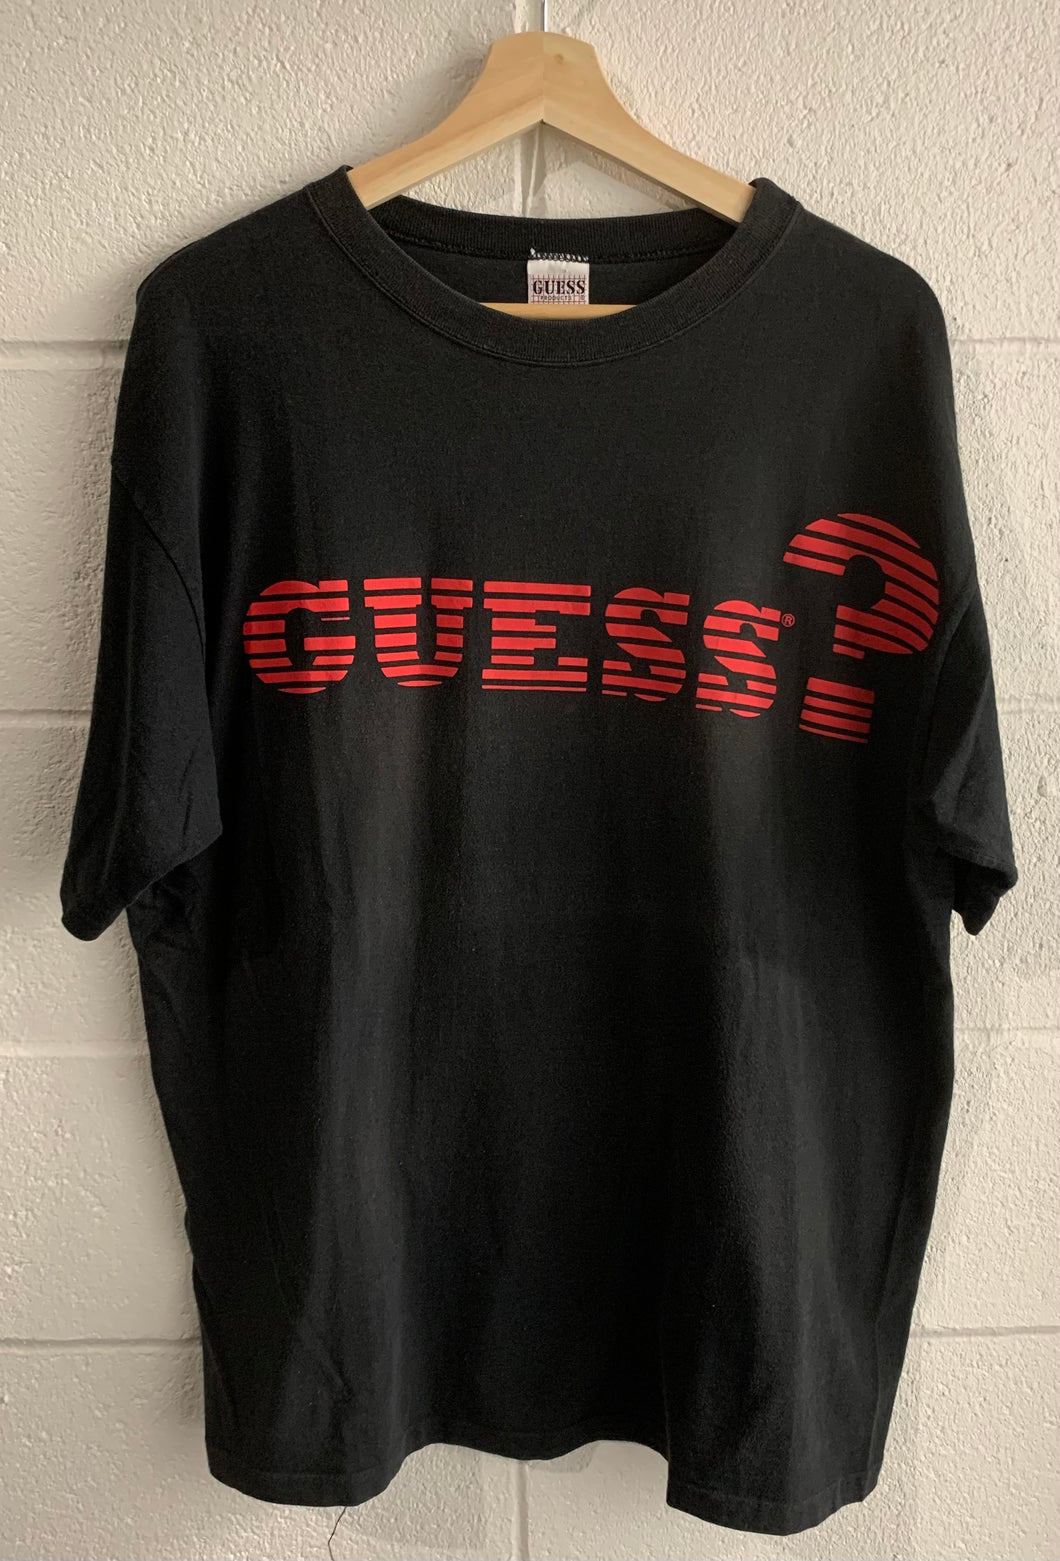 90s Guess Tee shirt